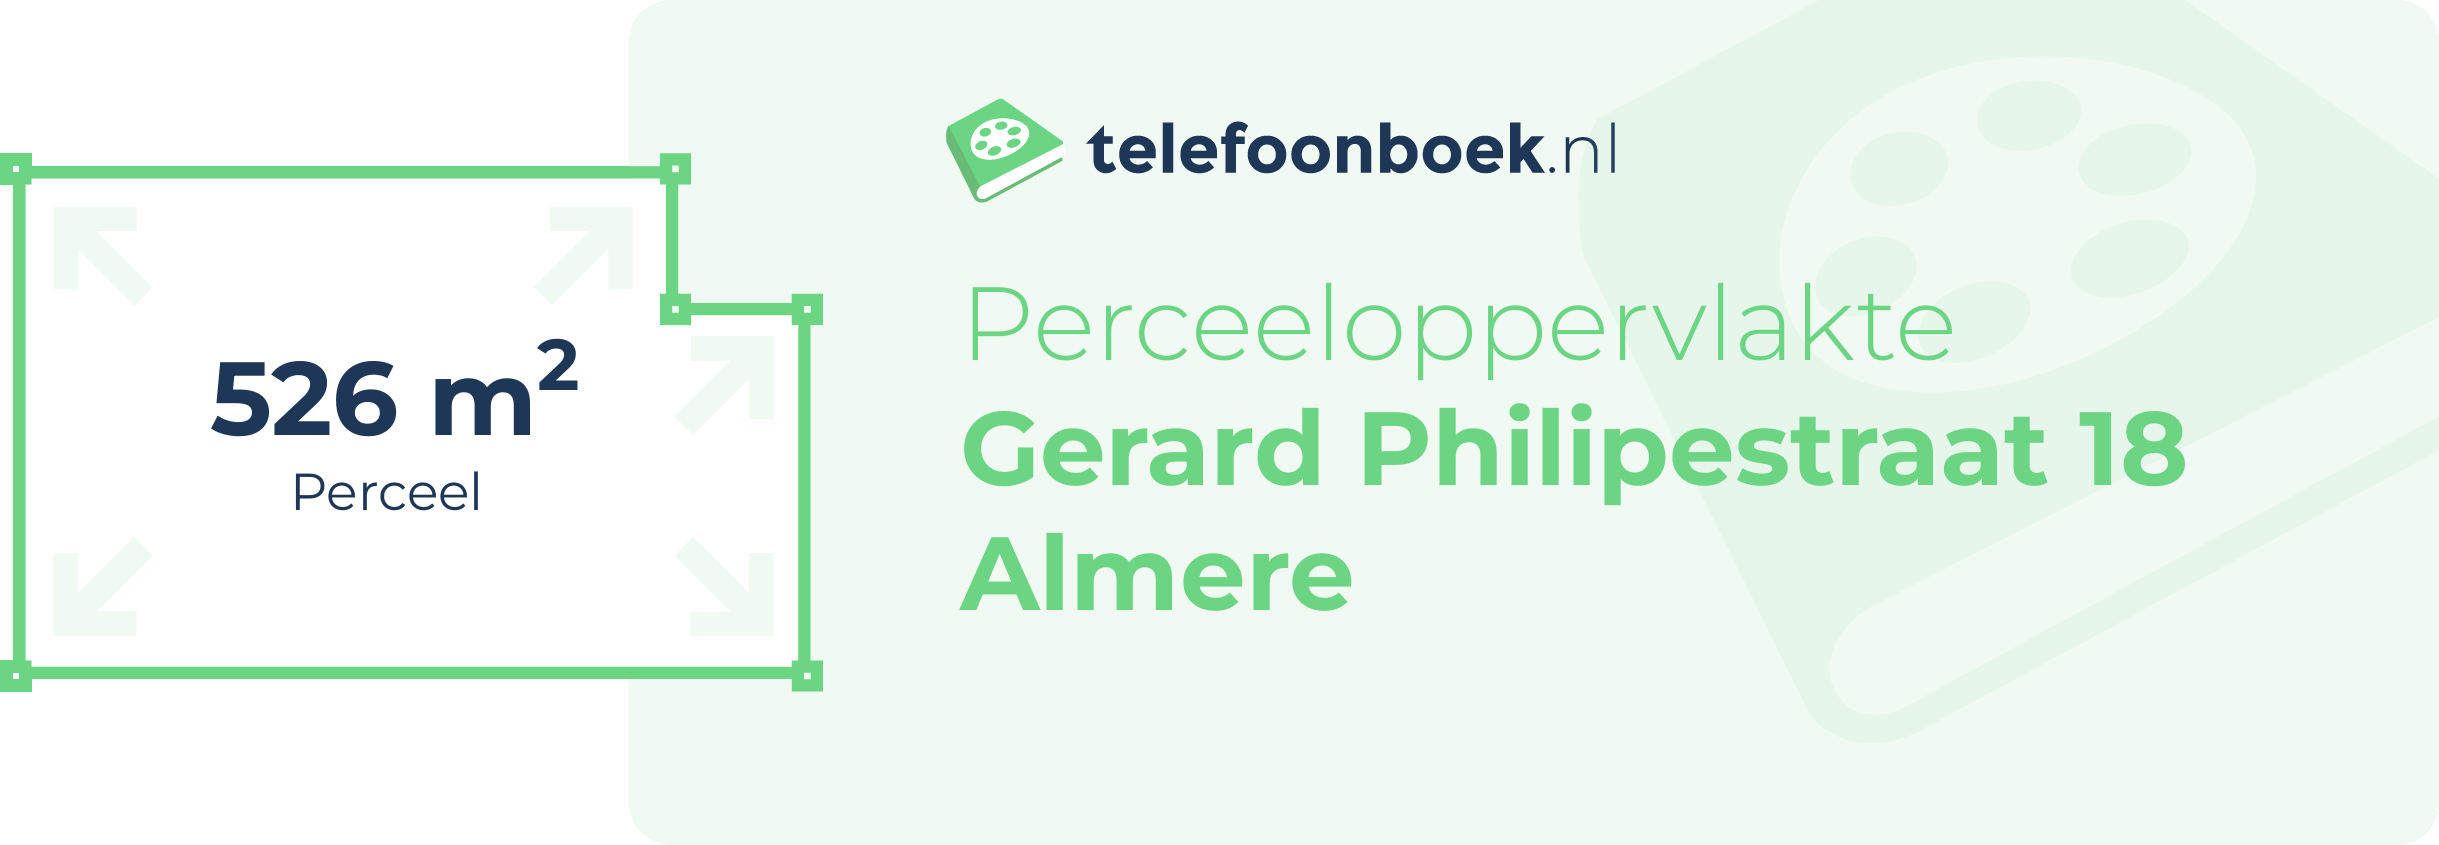 Perceeloppervlakte Gerard Philipestraat 18 Almere